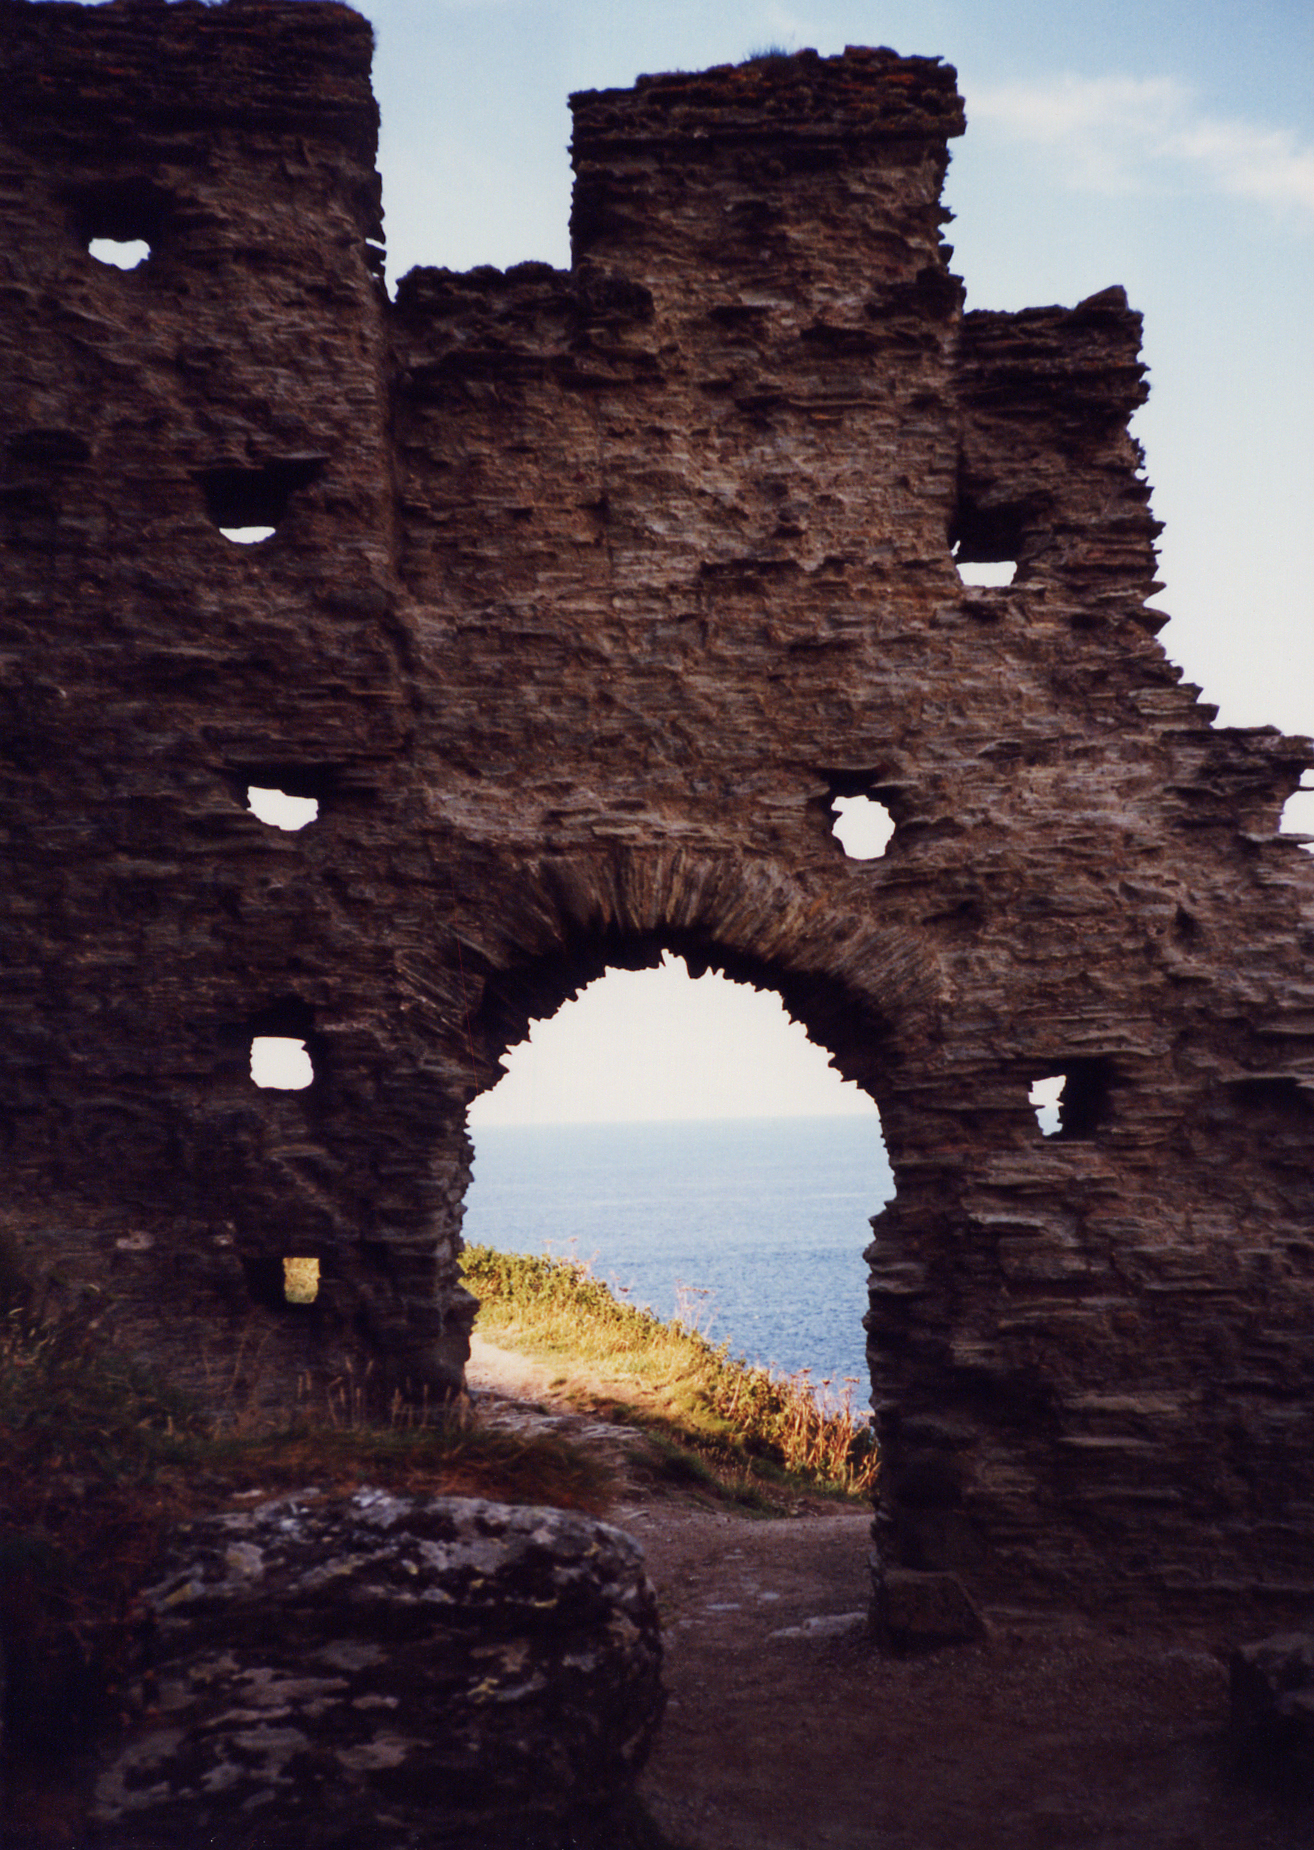 King Arthurs castle doorway